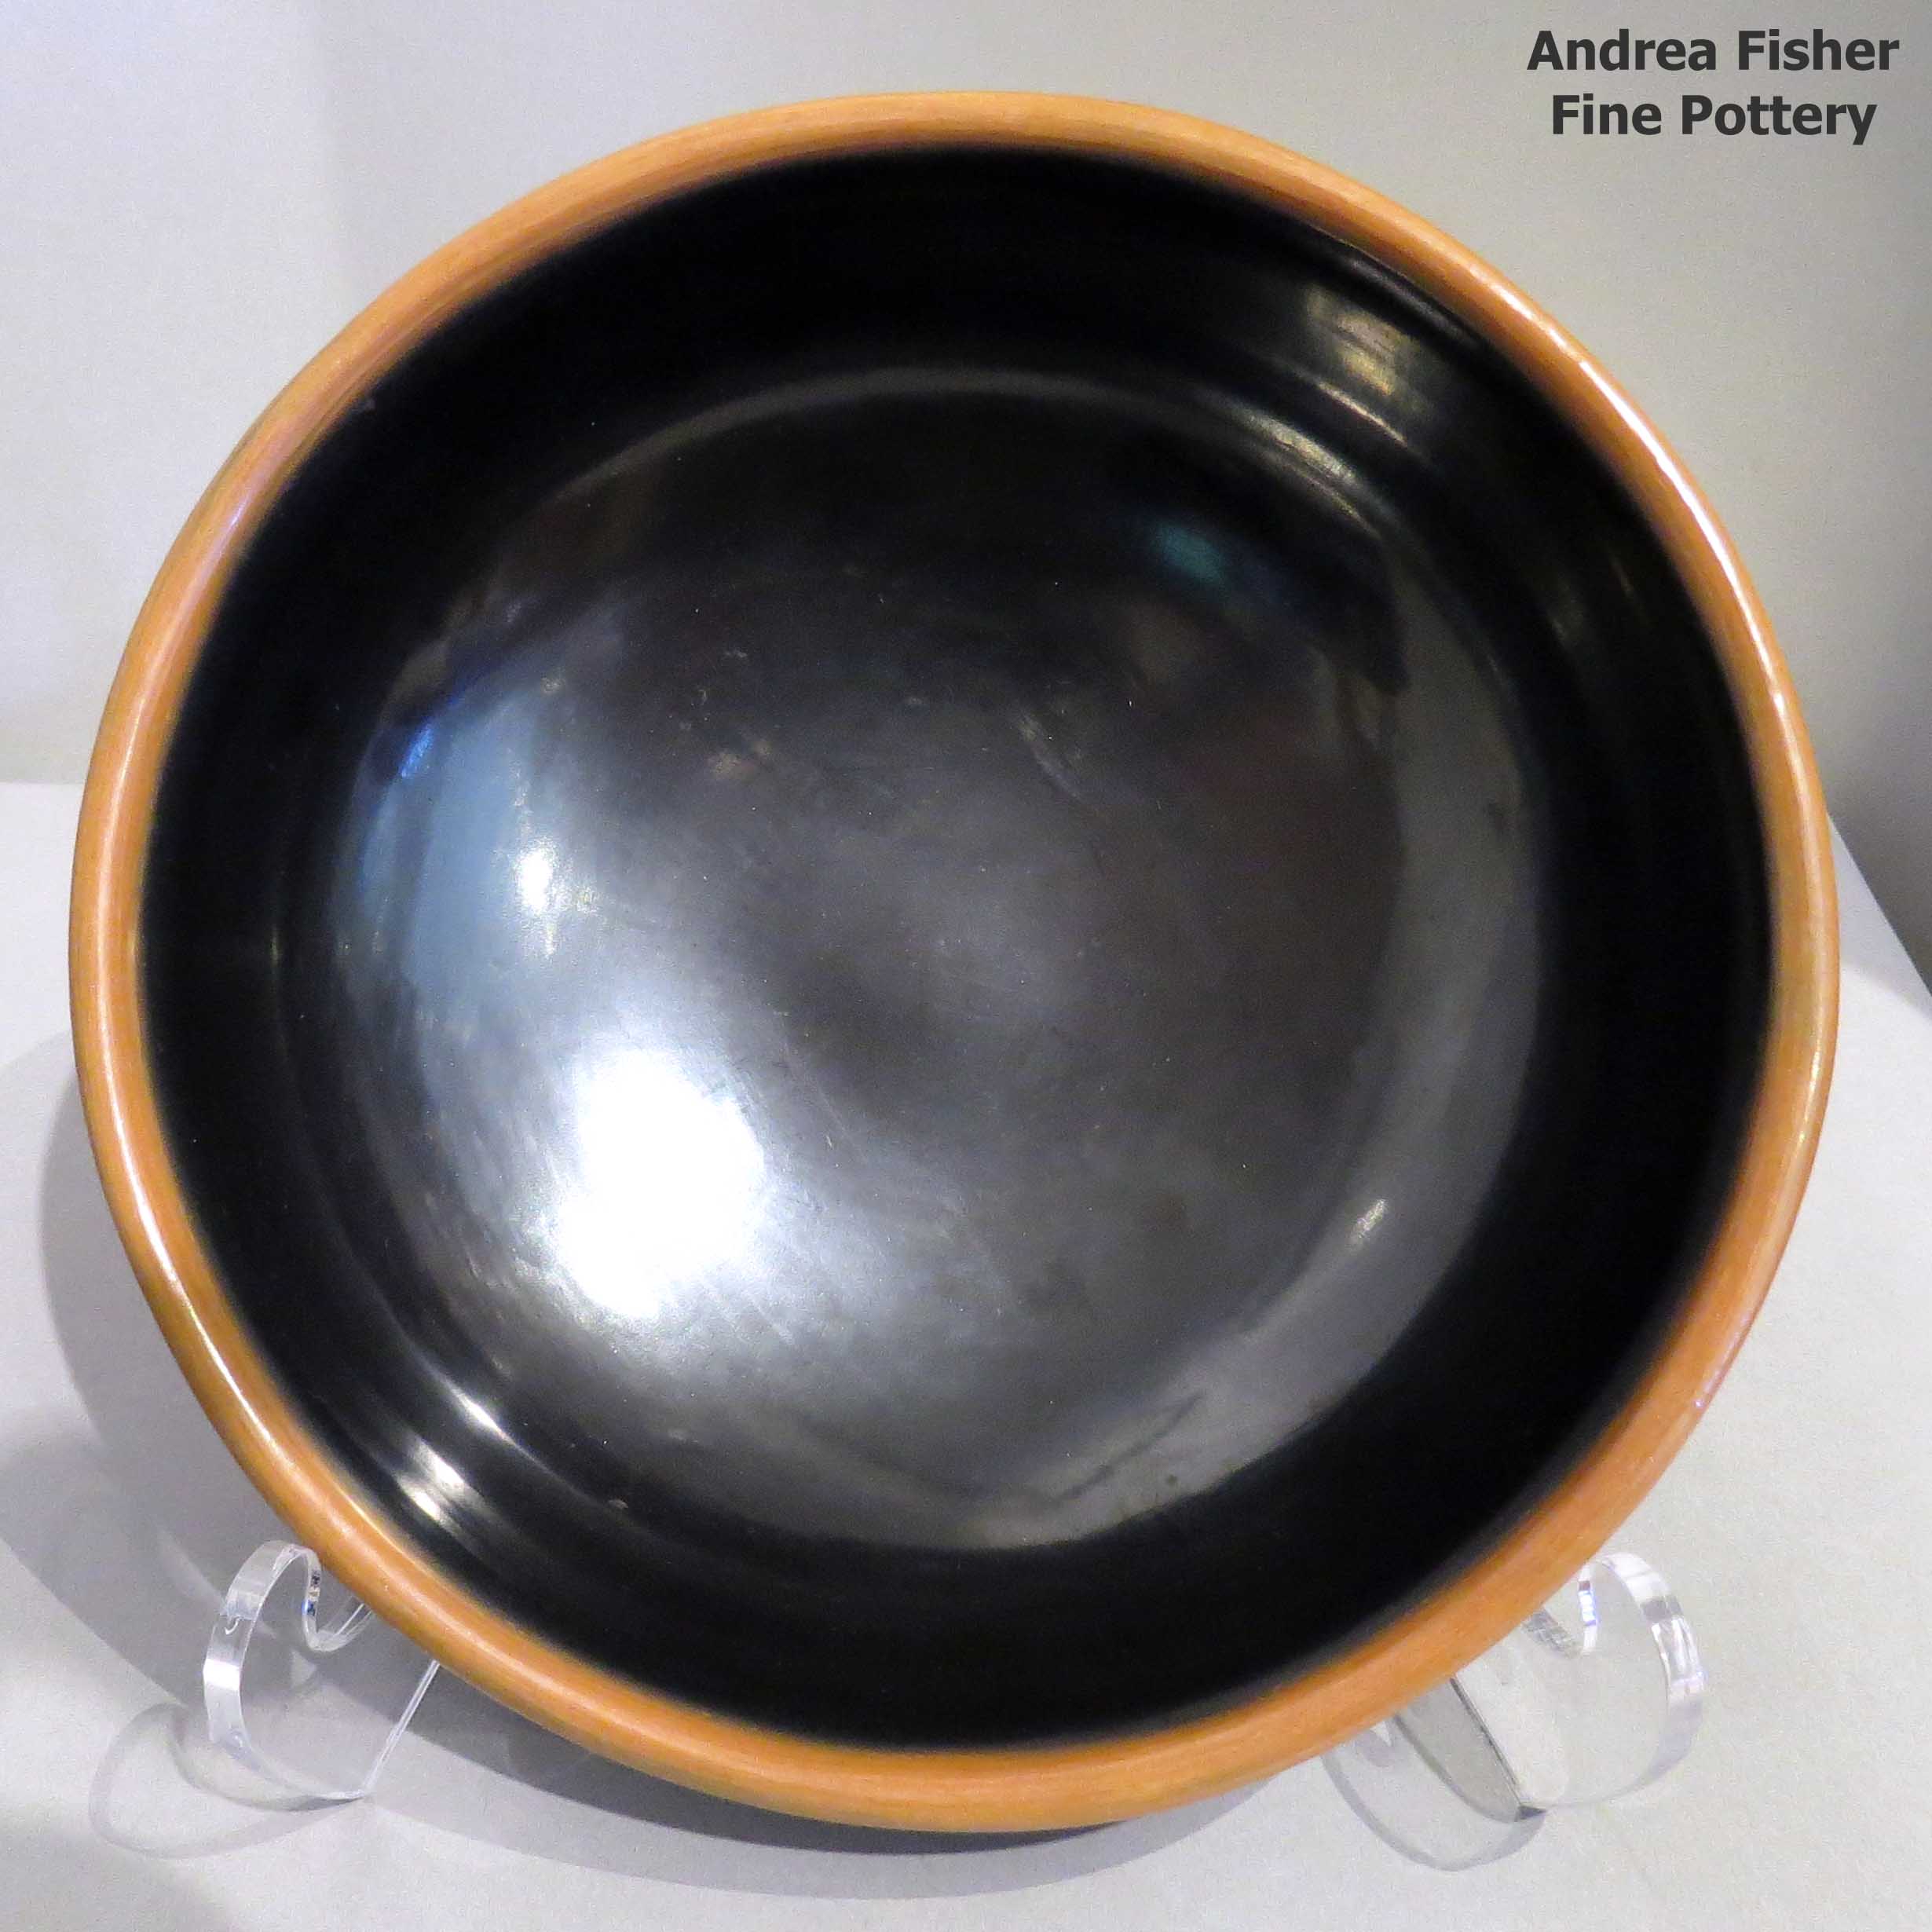 Andrea Fisher Fine Pottery - Maria Martinez, maria martinez